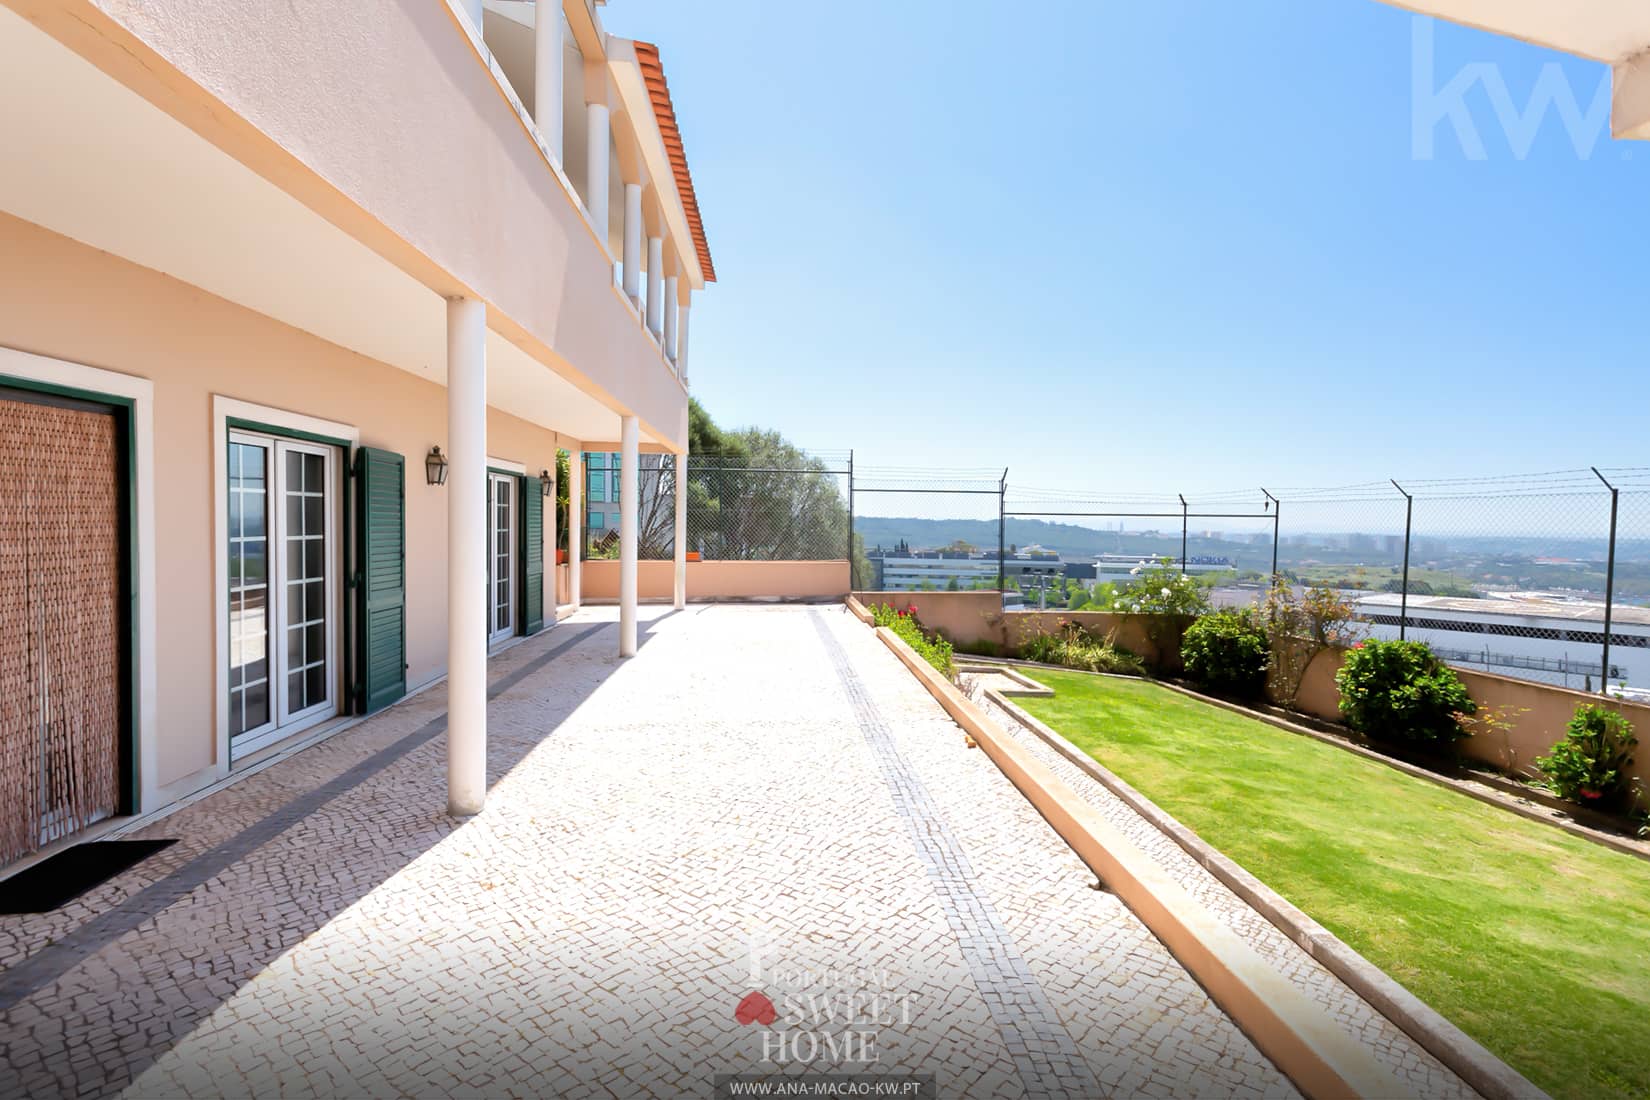 Quinta Grande, Alfragide - 6 bedroom villa with 4 floors and stunning views